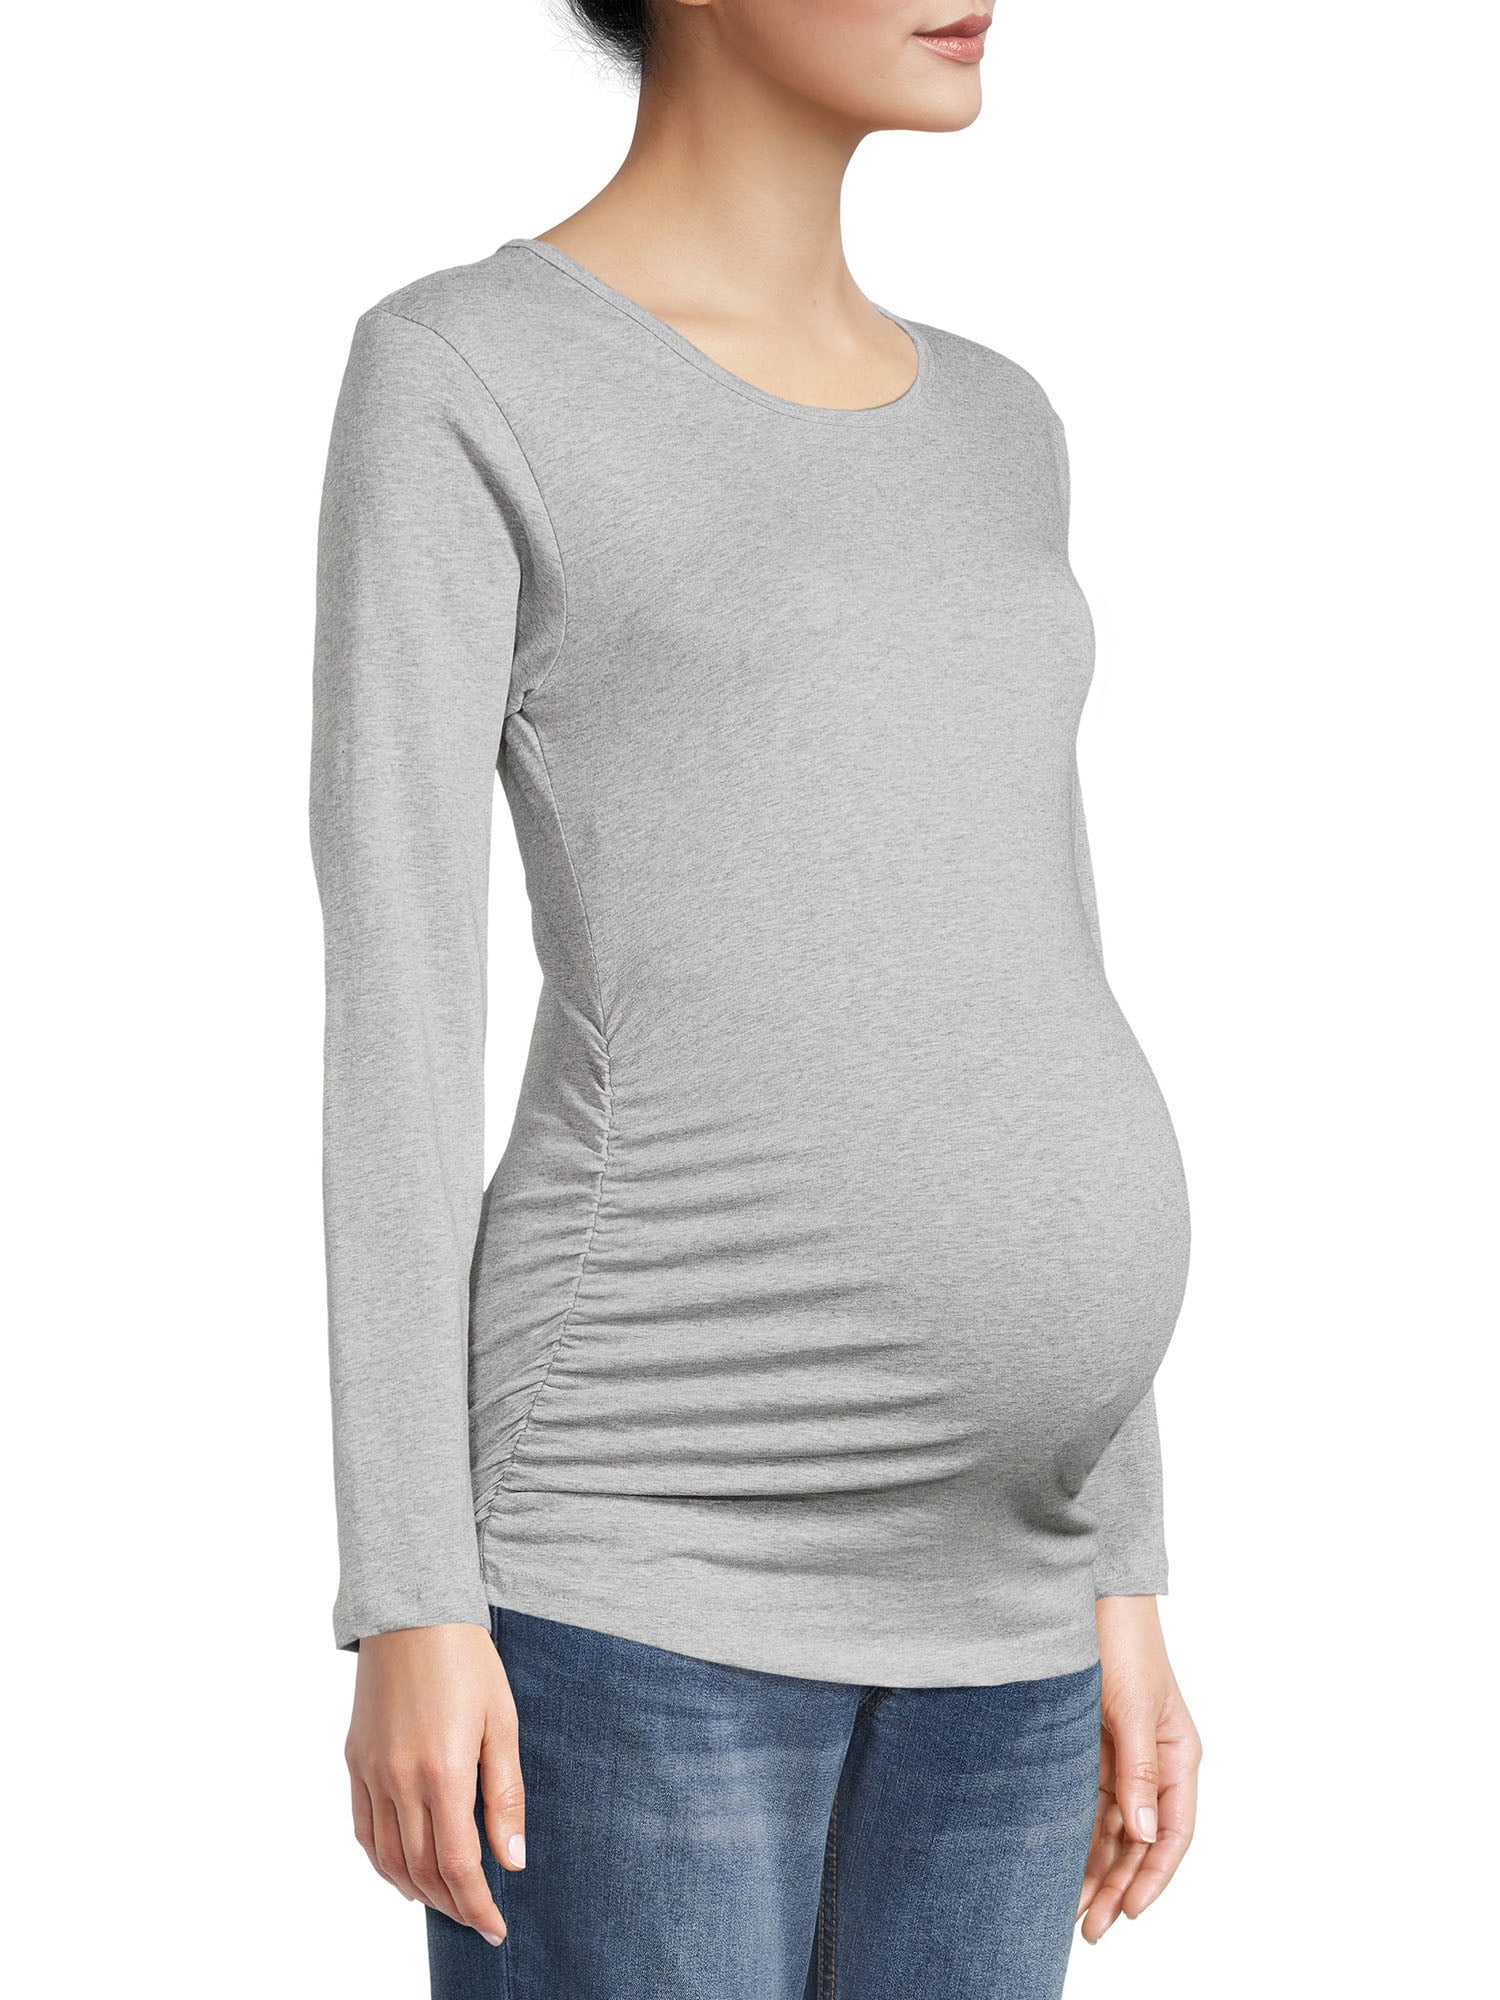 JK Unicorn Turtleneck & Long Sleeve Maternity Shirts Basic Top Ruch Sides Bodycon Tshirt for Pregnant Women 